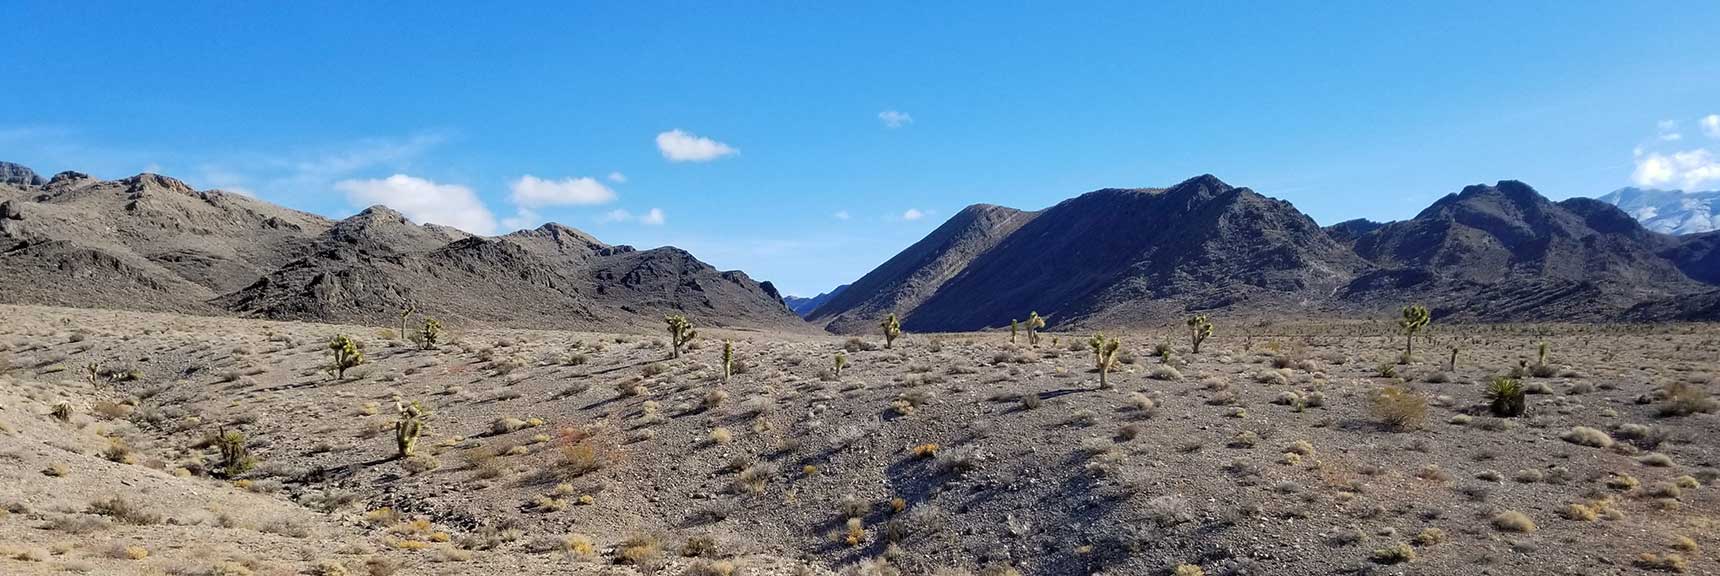 North Fossil Ridge Passage in the Desert National Wildlife Refuge, Nevada